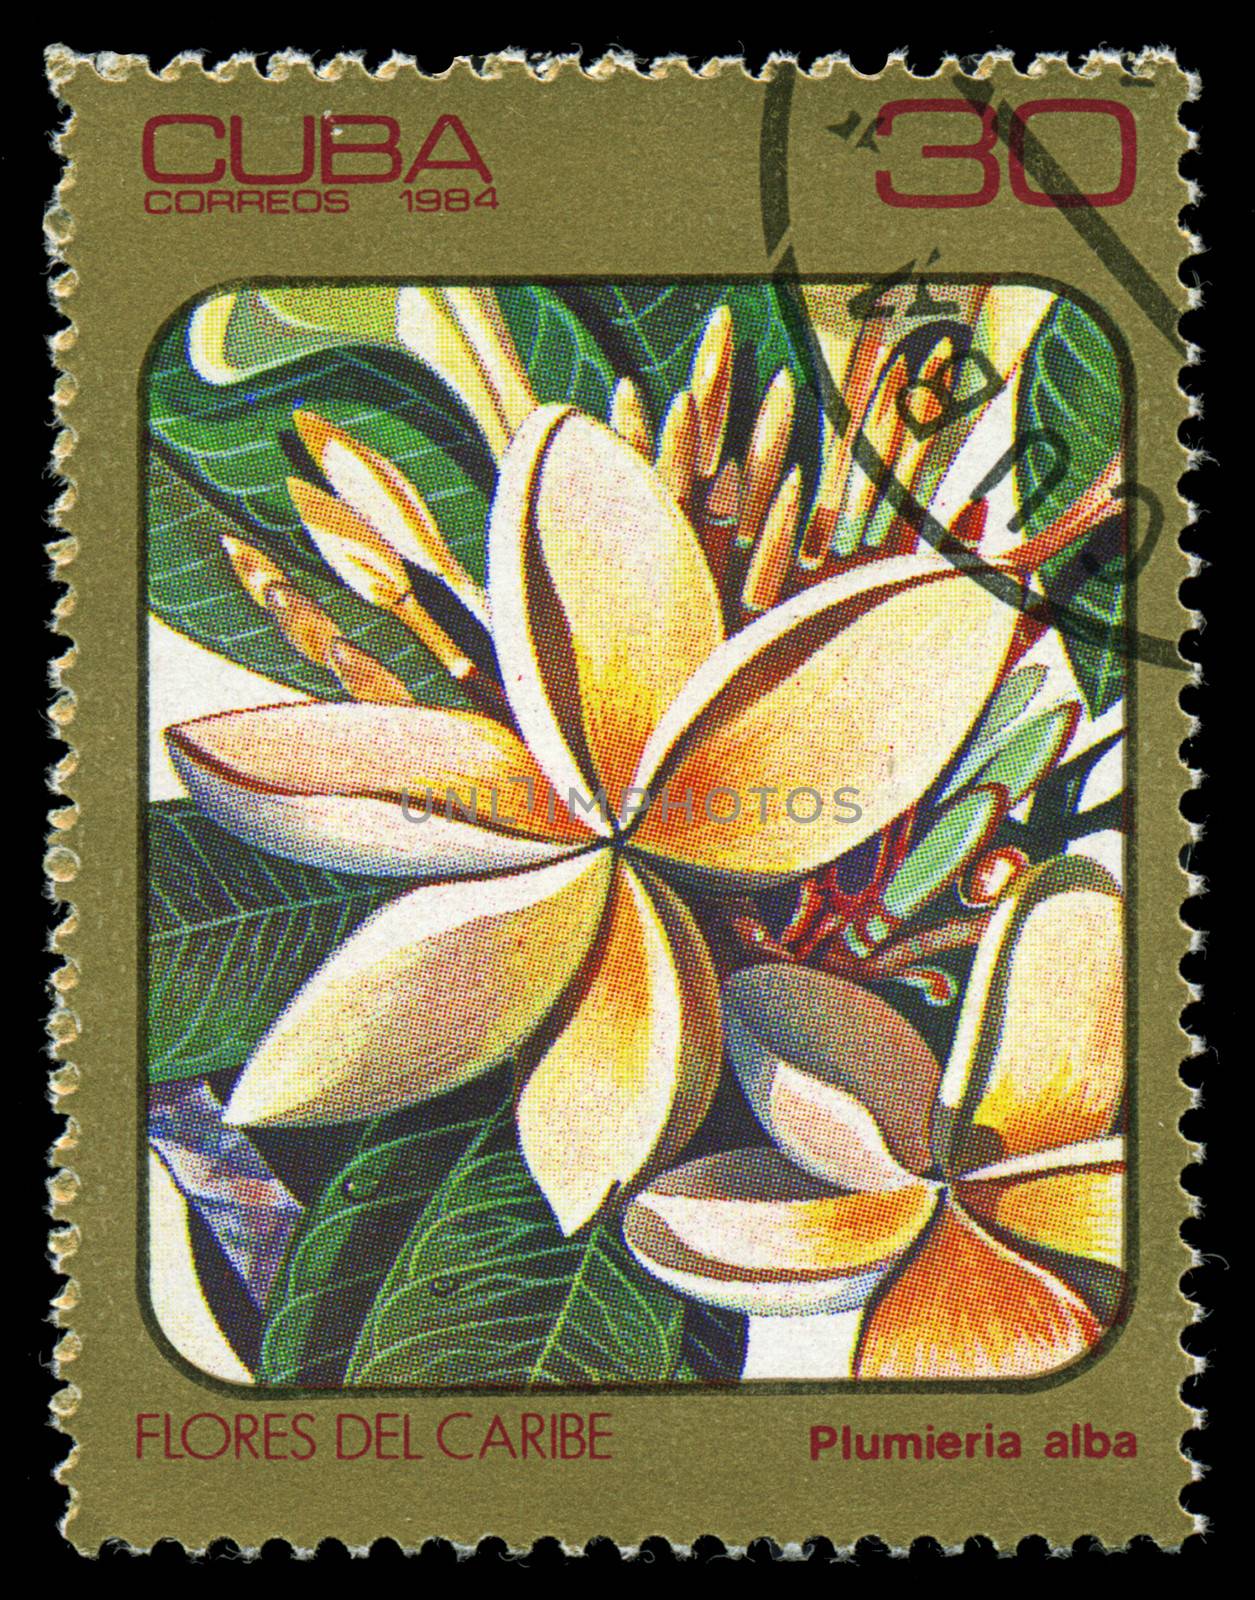 CUBA - CIRCA 1984: post stamp printed in Cuba shows image of plumeria alba (plumieria) from Caribbean flowers series, Scott catalog 2691 A730 30c, circa 1984